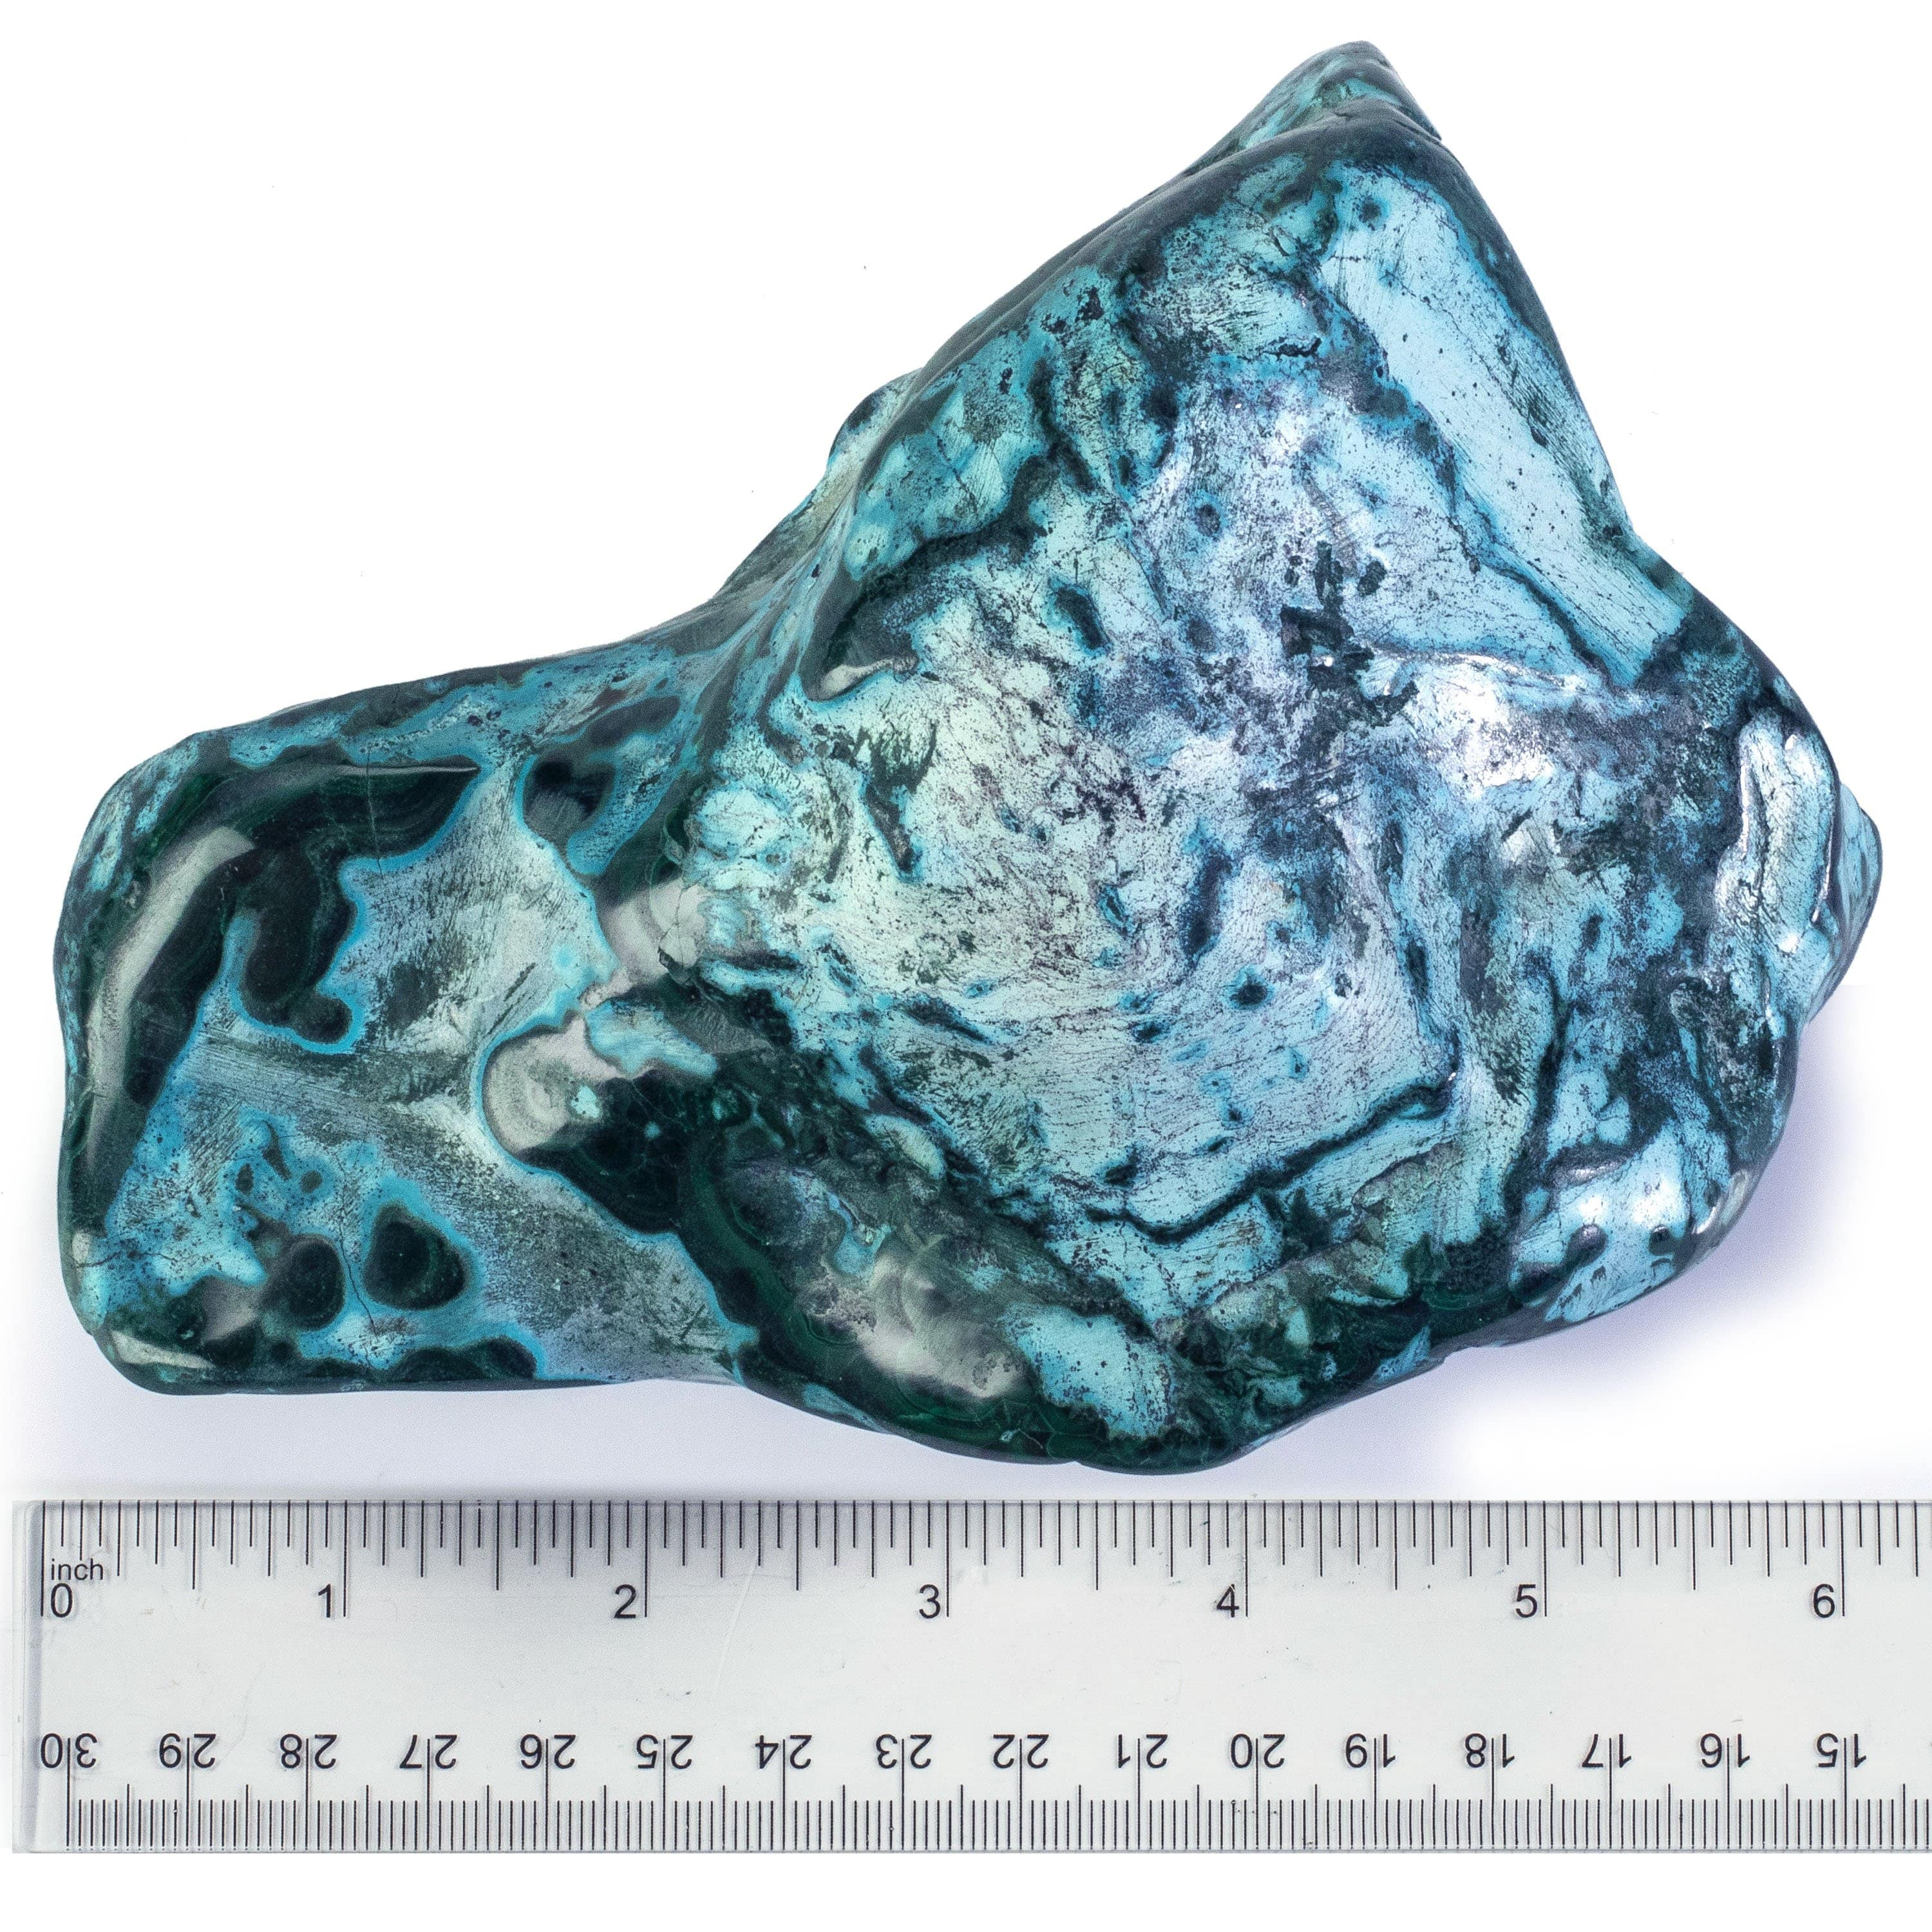 Kalifano Malachite Rare Natural Green Malachite with Blue Chrysocolla Freeform Specimen from Congo - 1.2 kg / 2.5 lbs MAC950.003